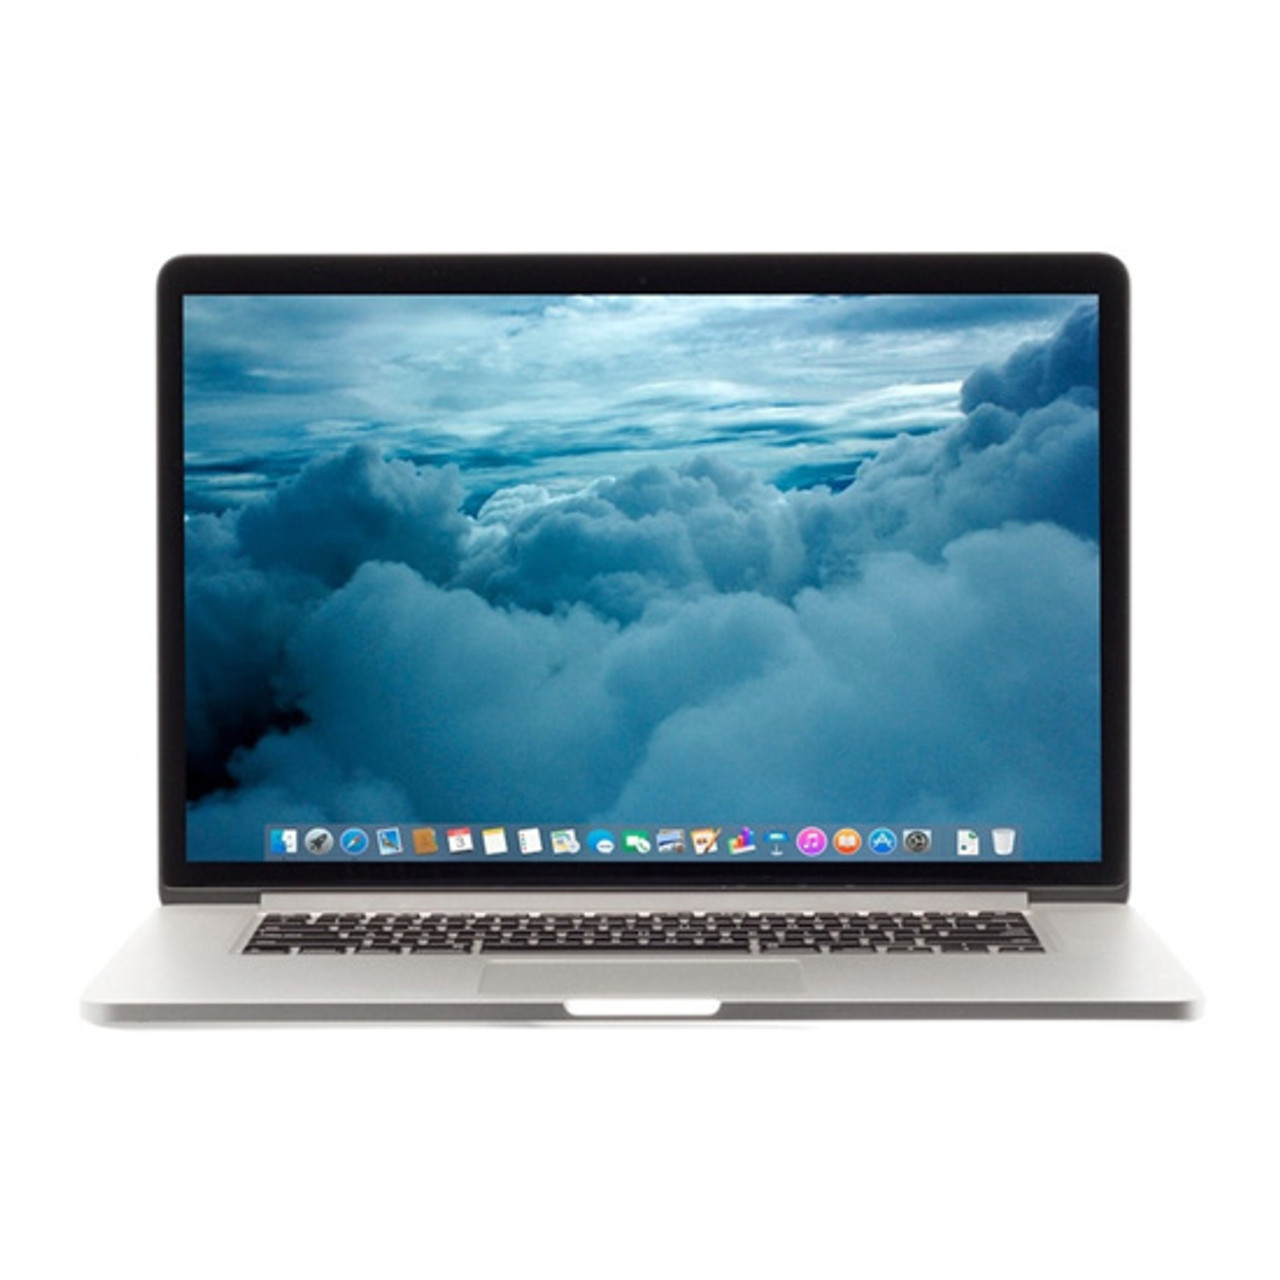 Apple MacBook Pro 15-inch 2.5GHz Quad-core i7 (Retina, Mid 2015)